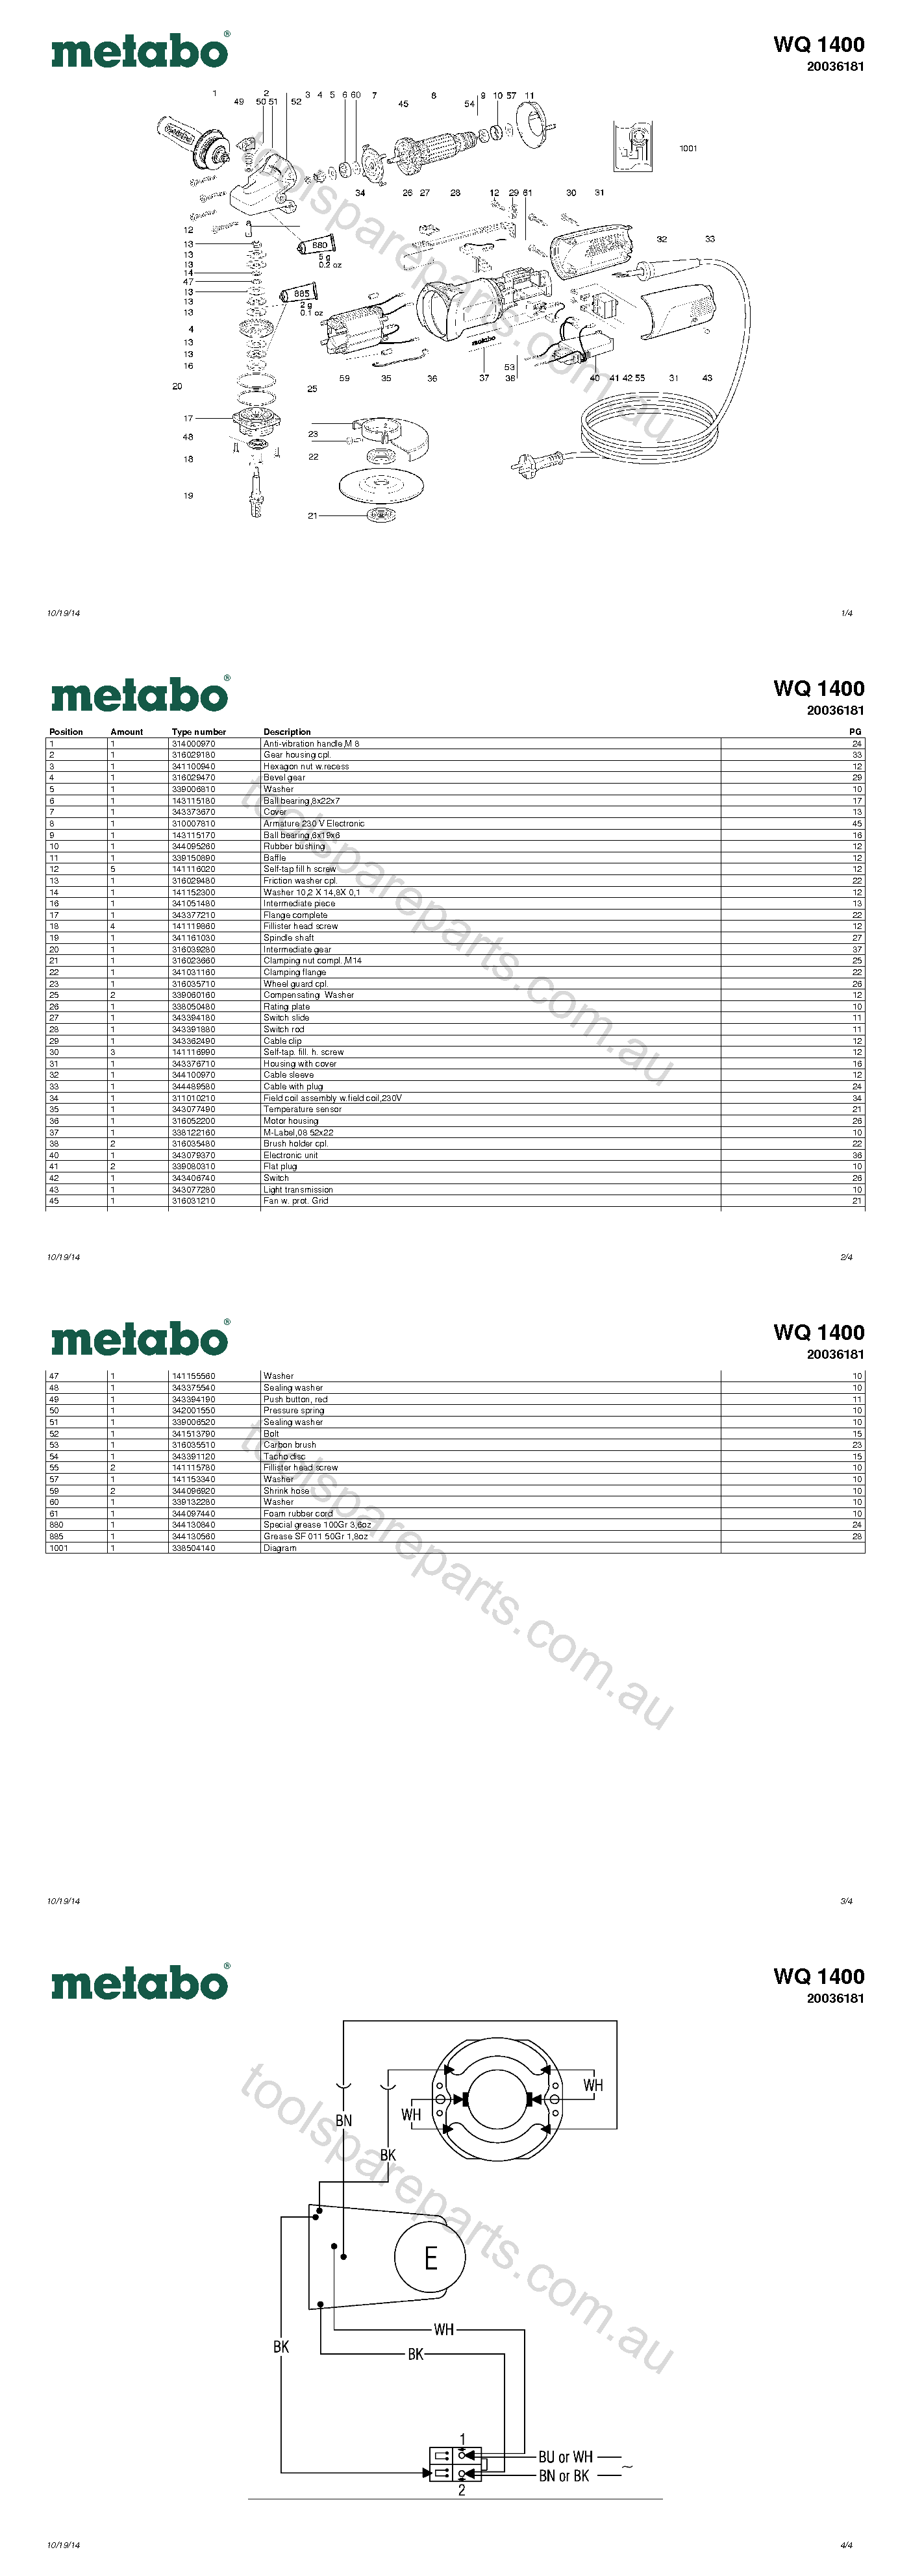 Metabo WQ 1400 20036181  Diagram 1